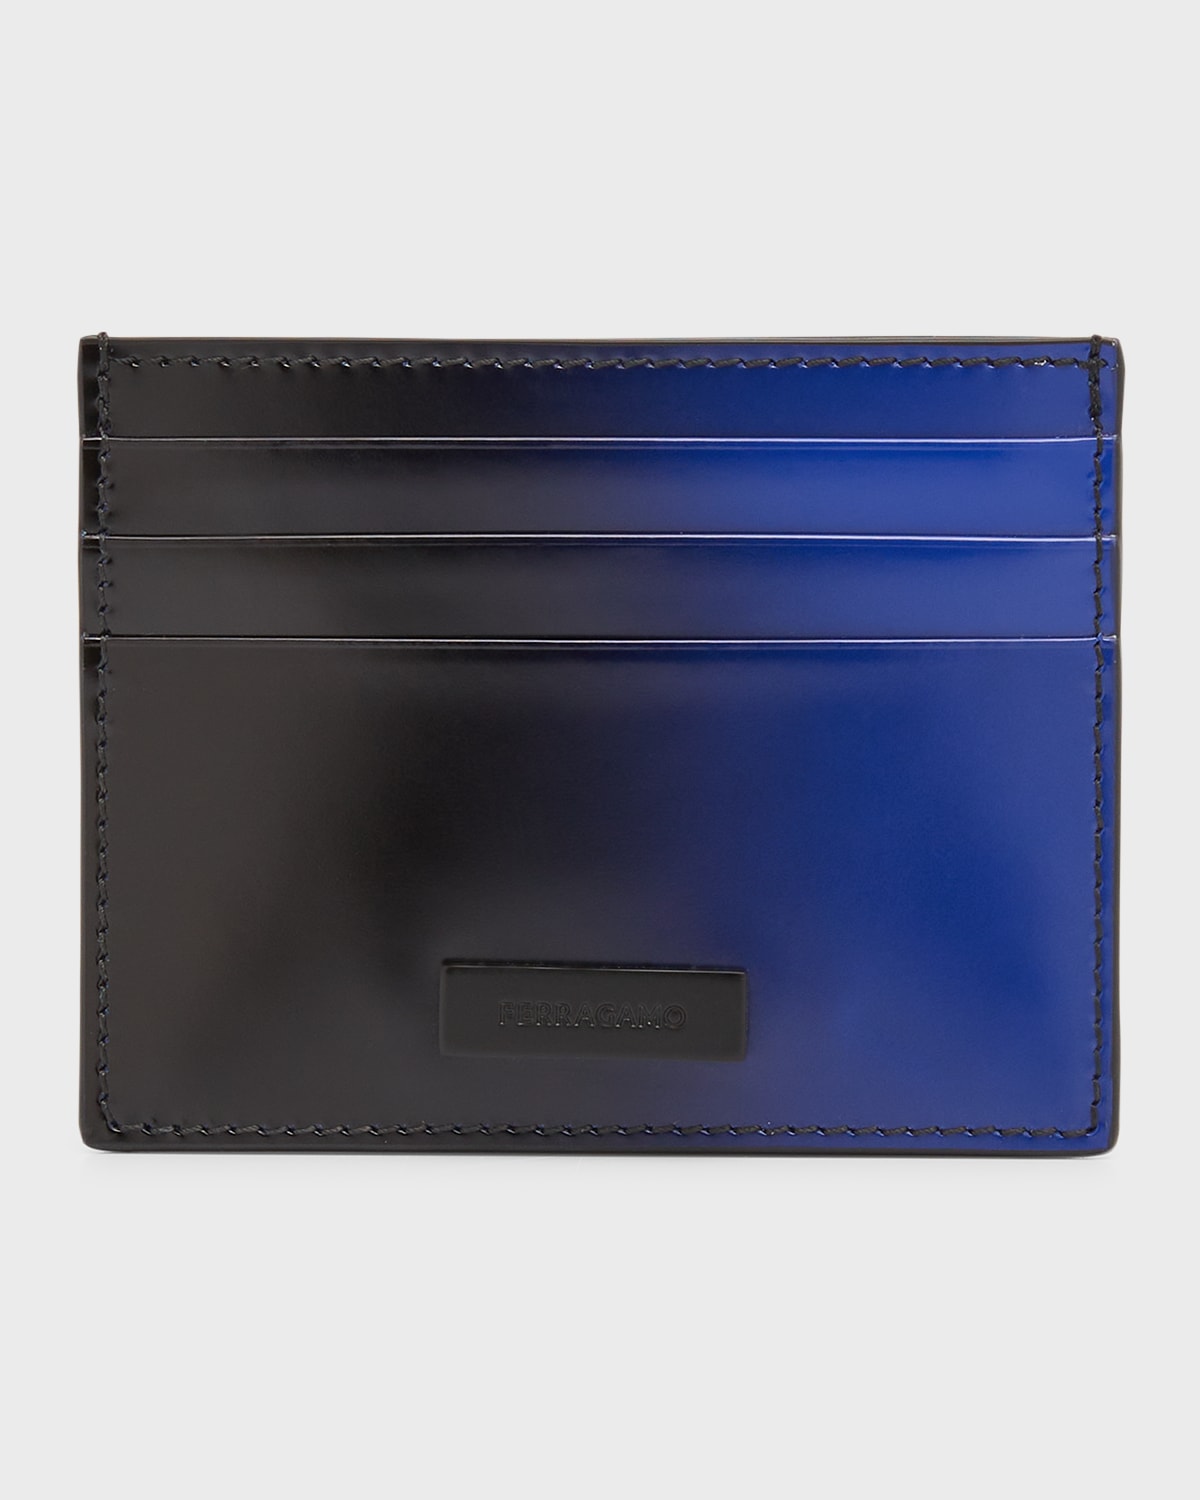 Shop Ferragamo Men's Lingotto Degrade Leather Card Case In Lapis